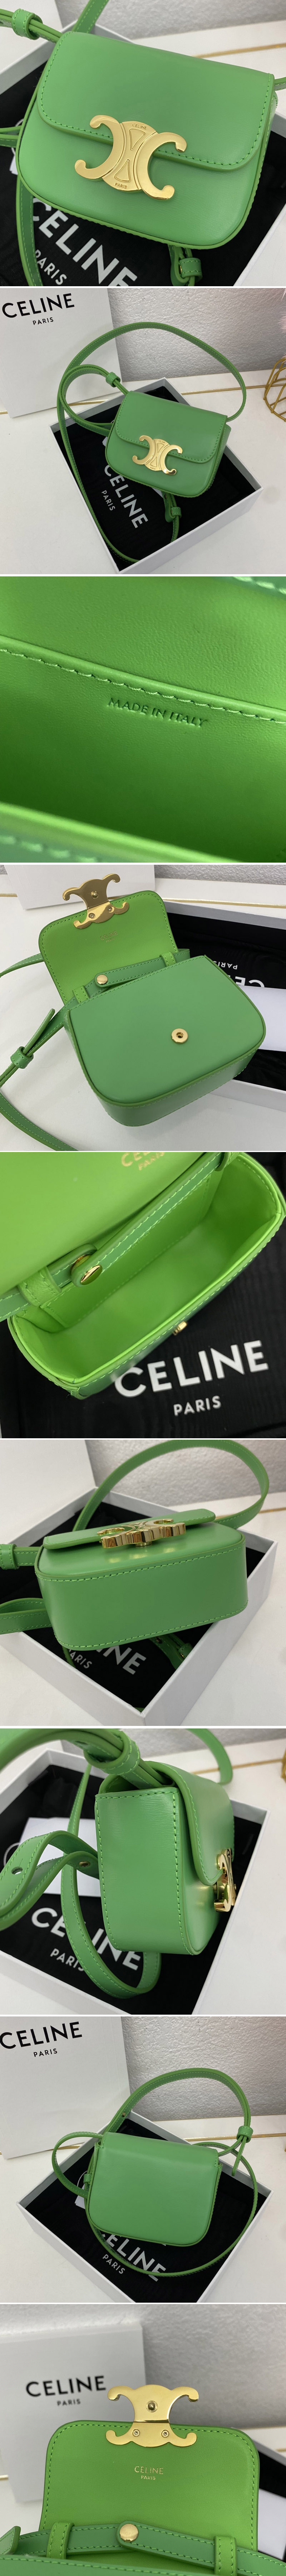 Replica Celine Bags